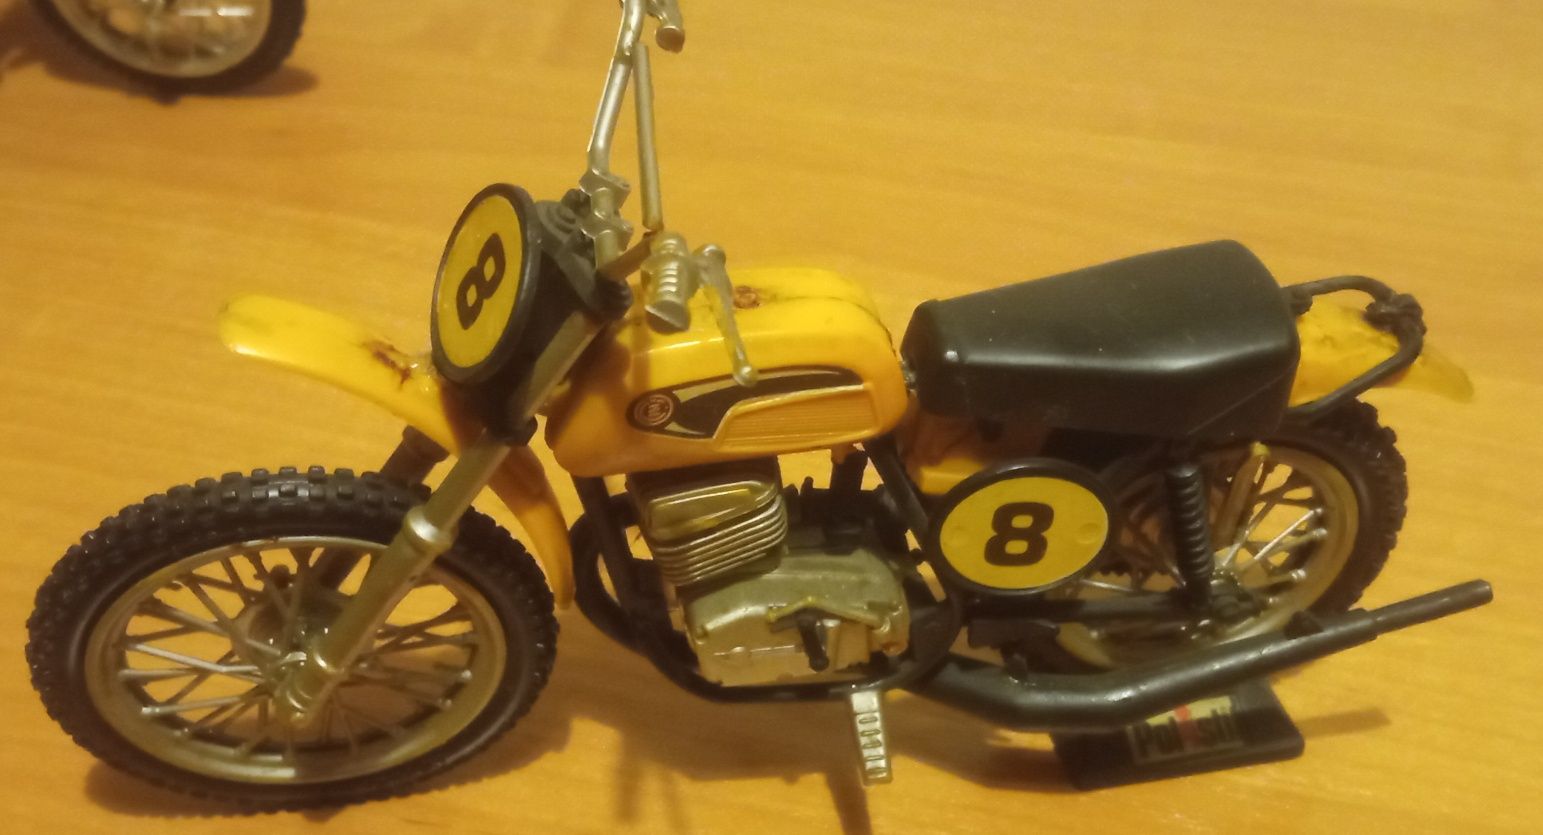 Model Motocross firmy Polistill (żółty)